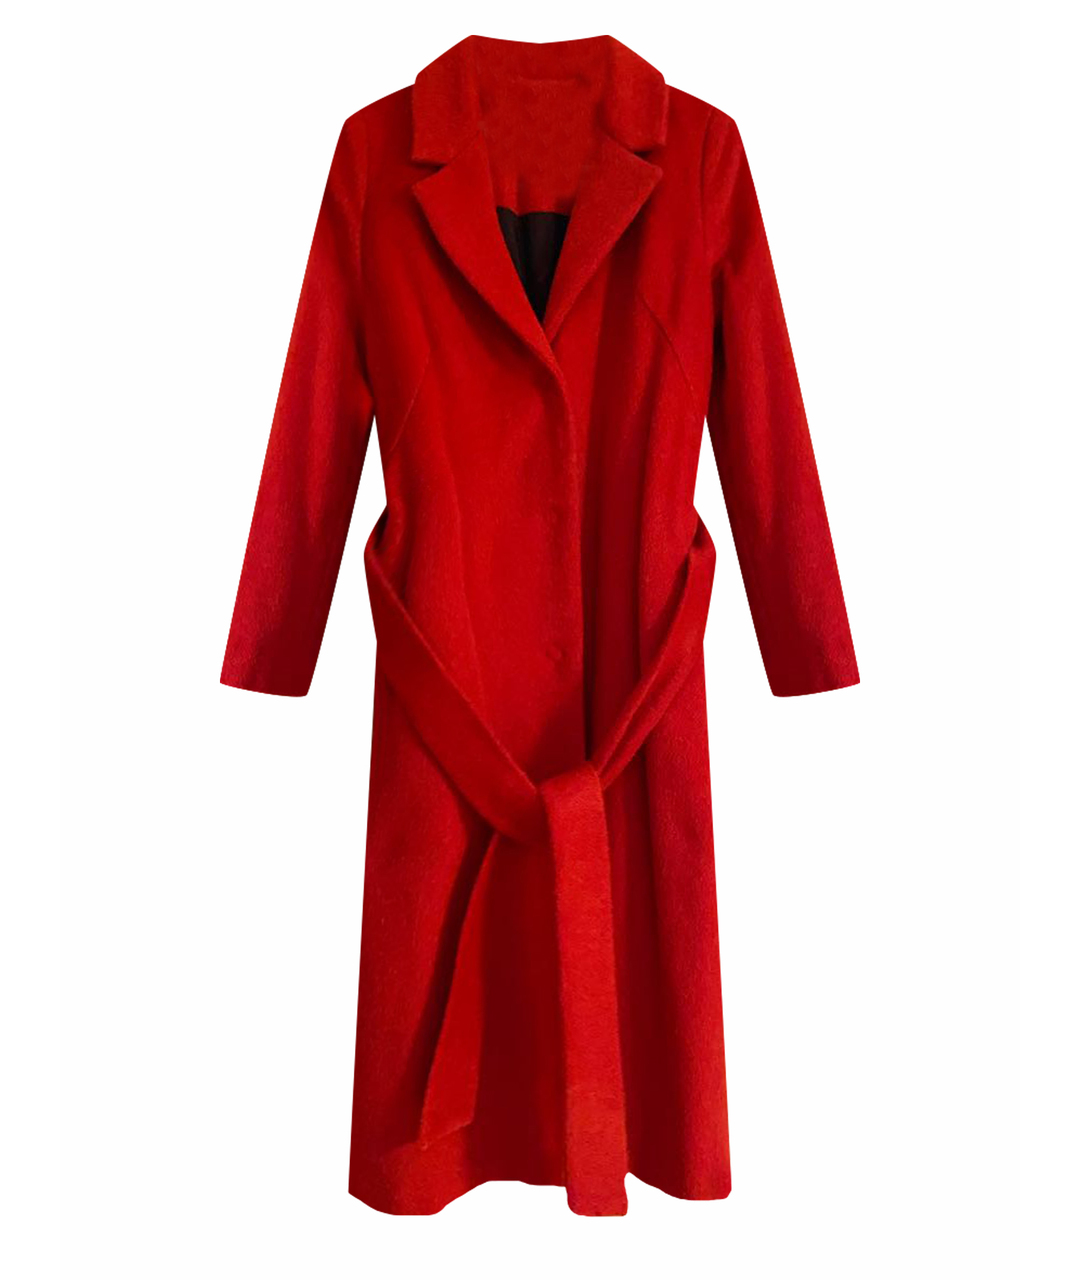 PATRICK HELLMANN Красное кашемировое пальто, фото 1